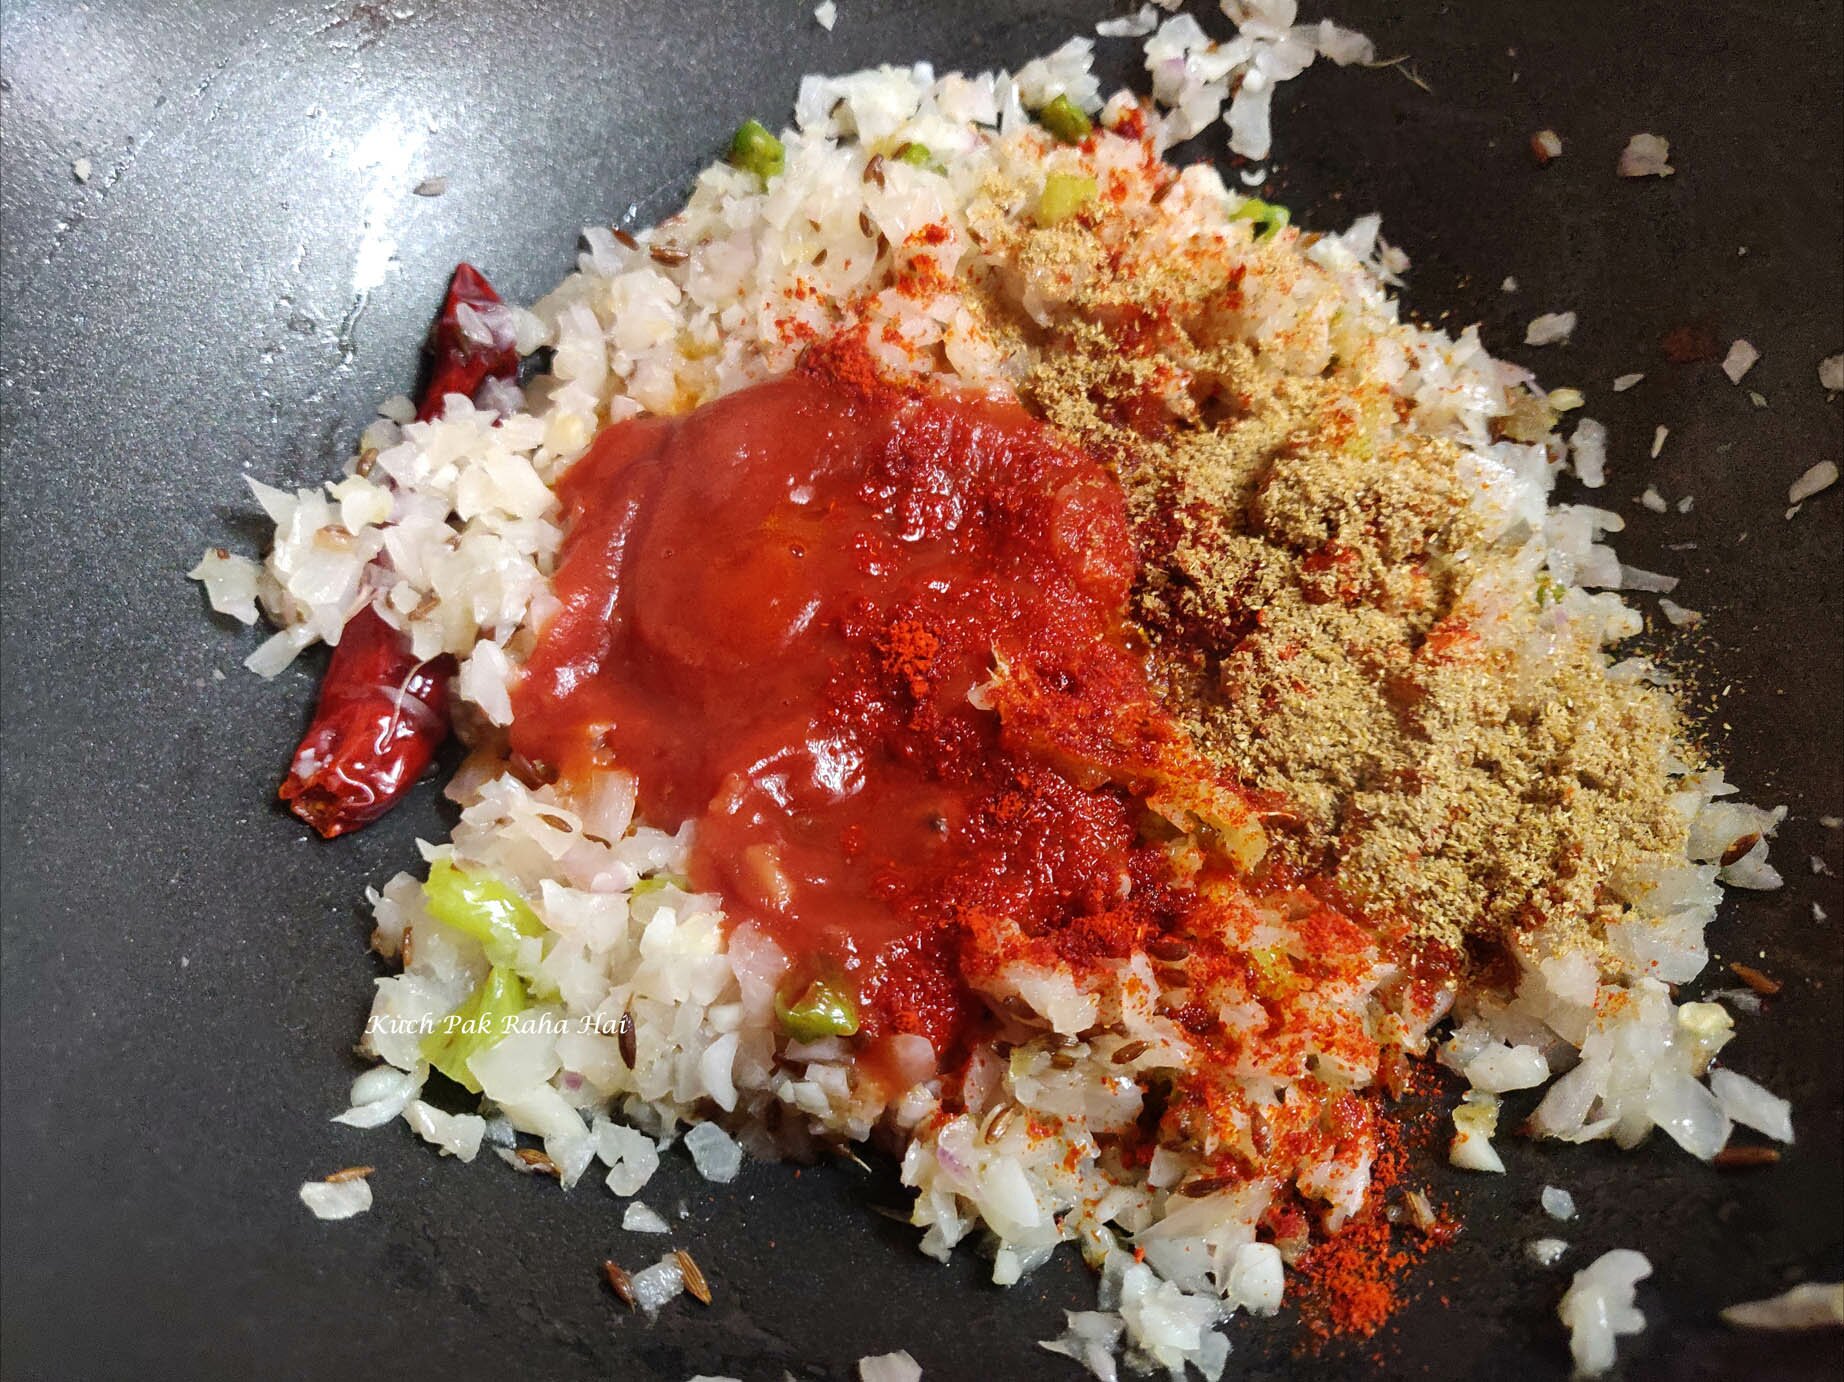 Adding tomato puree and spices to make masala for dal.